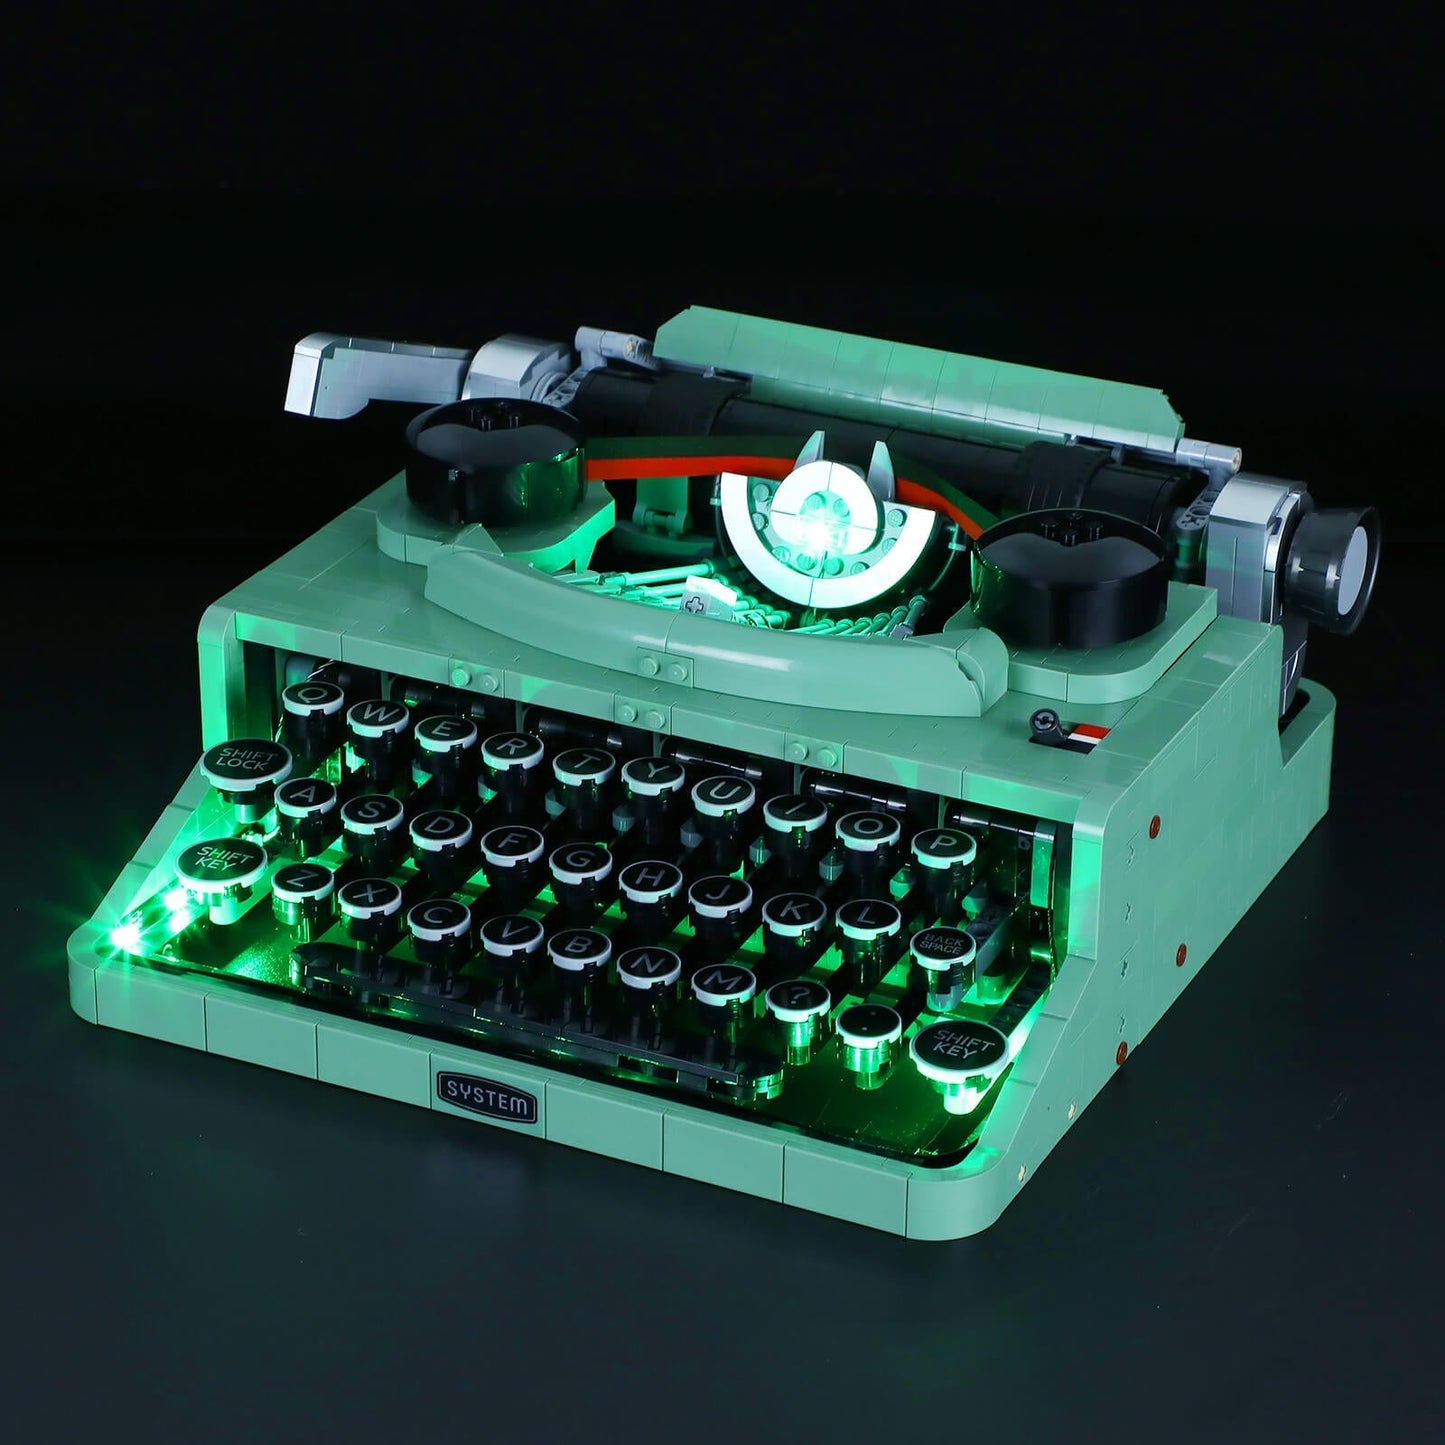 lego ideas typewriter set 21327 lighting system